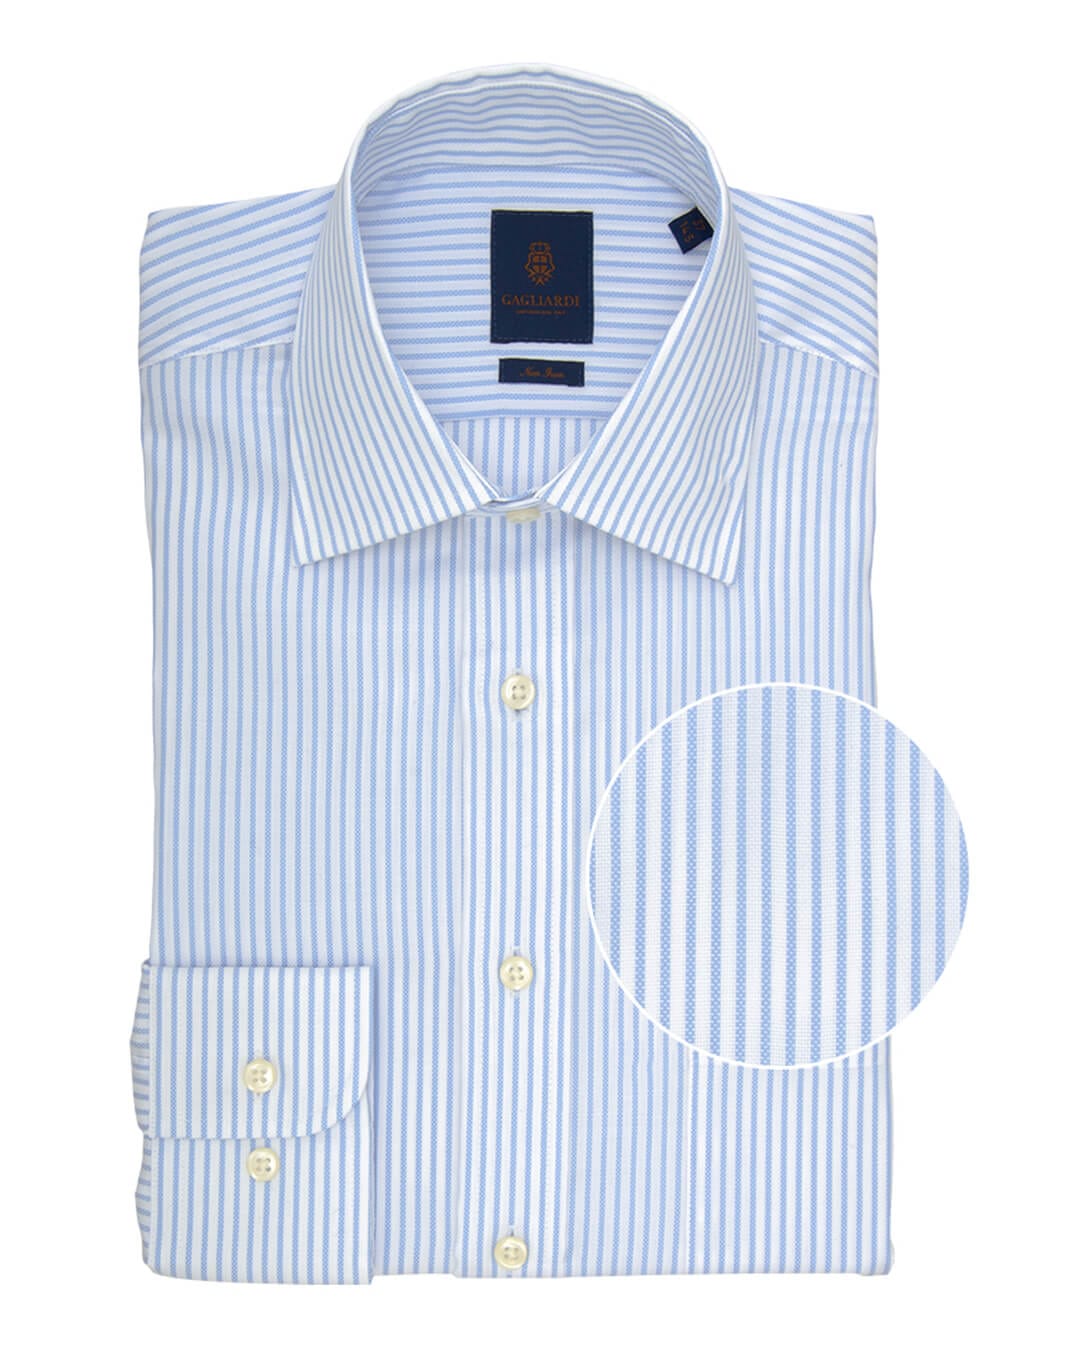 Gagliardi Shirts Gagliardi Tailored Fit Sky Bengal Striped Non Iron Oxford Cotton Shirt